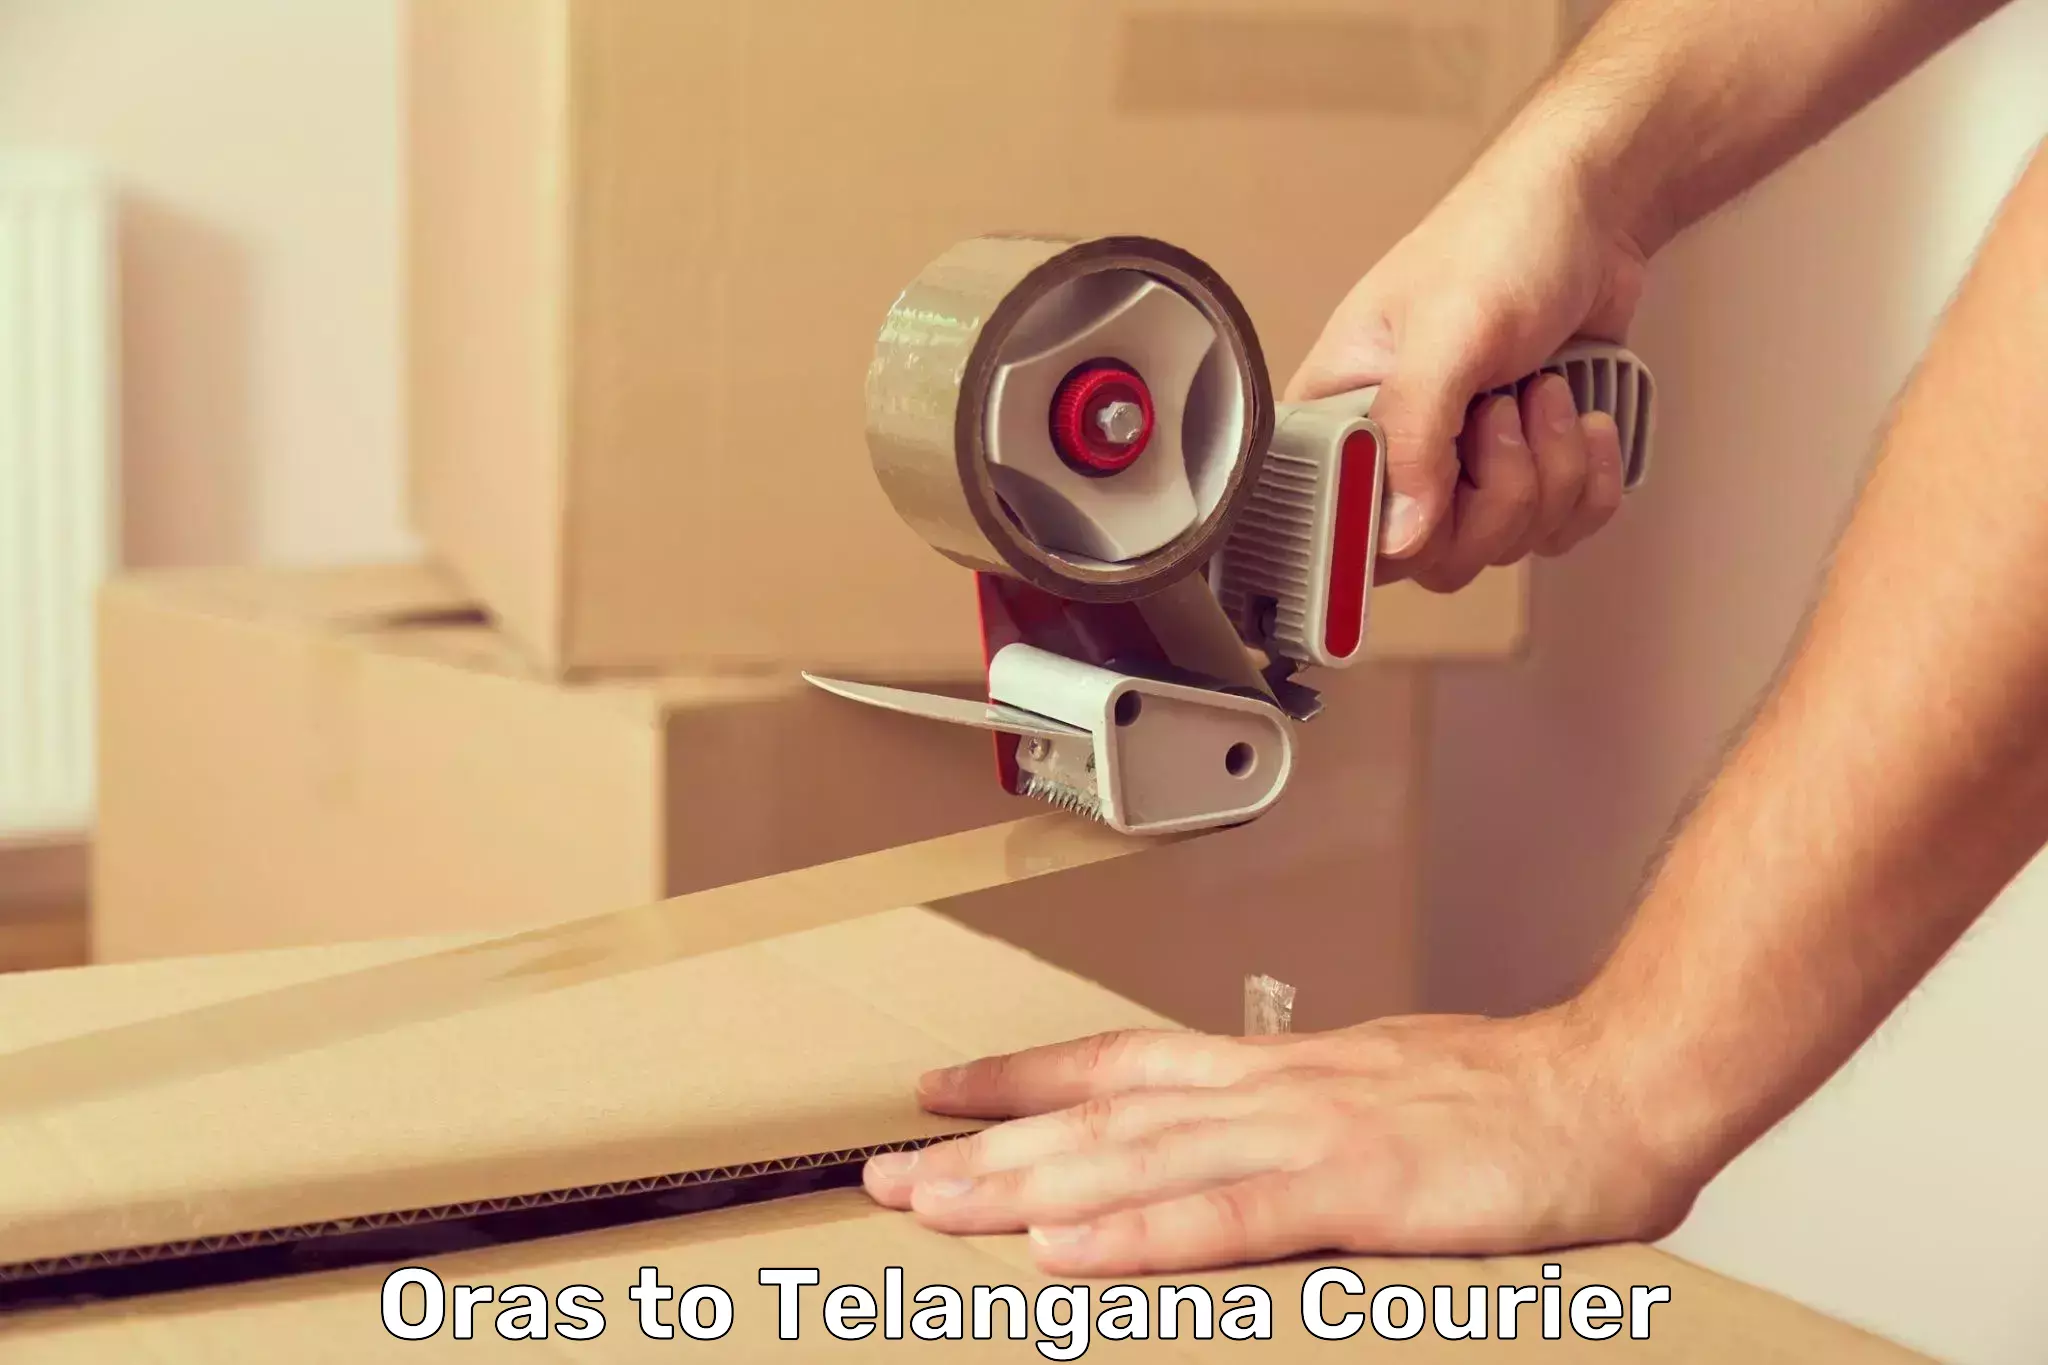 Courier service comparison Oras to Telangana